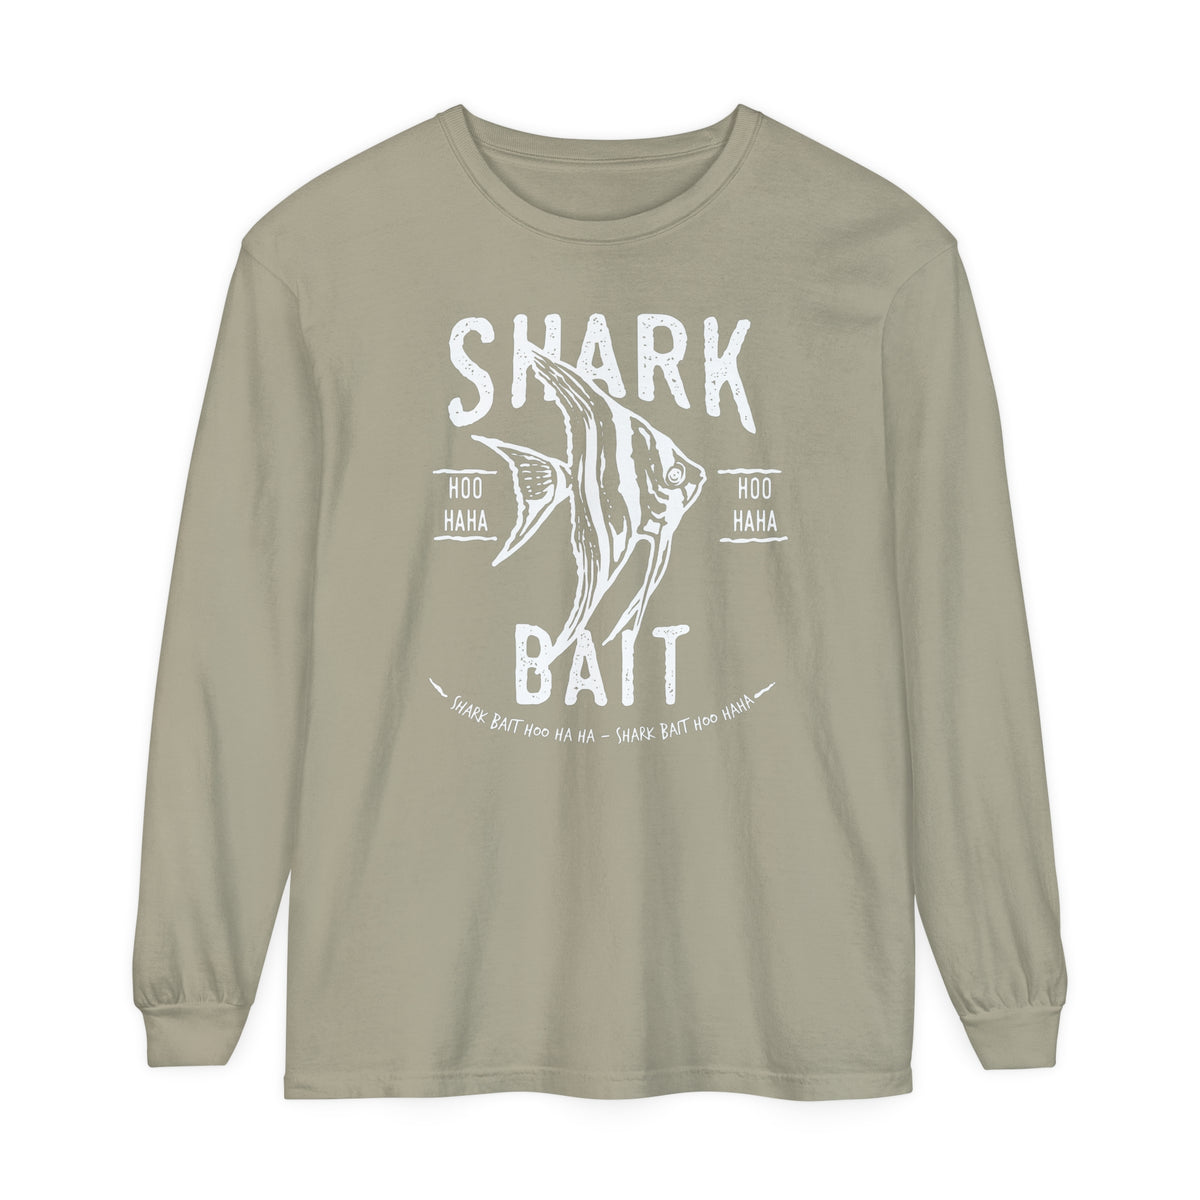 Shark Bait Hoo Haha Comfort Colors Unisex Garment-dyed Long Sleeve T-Shirt